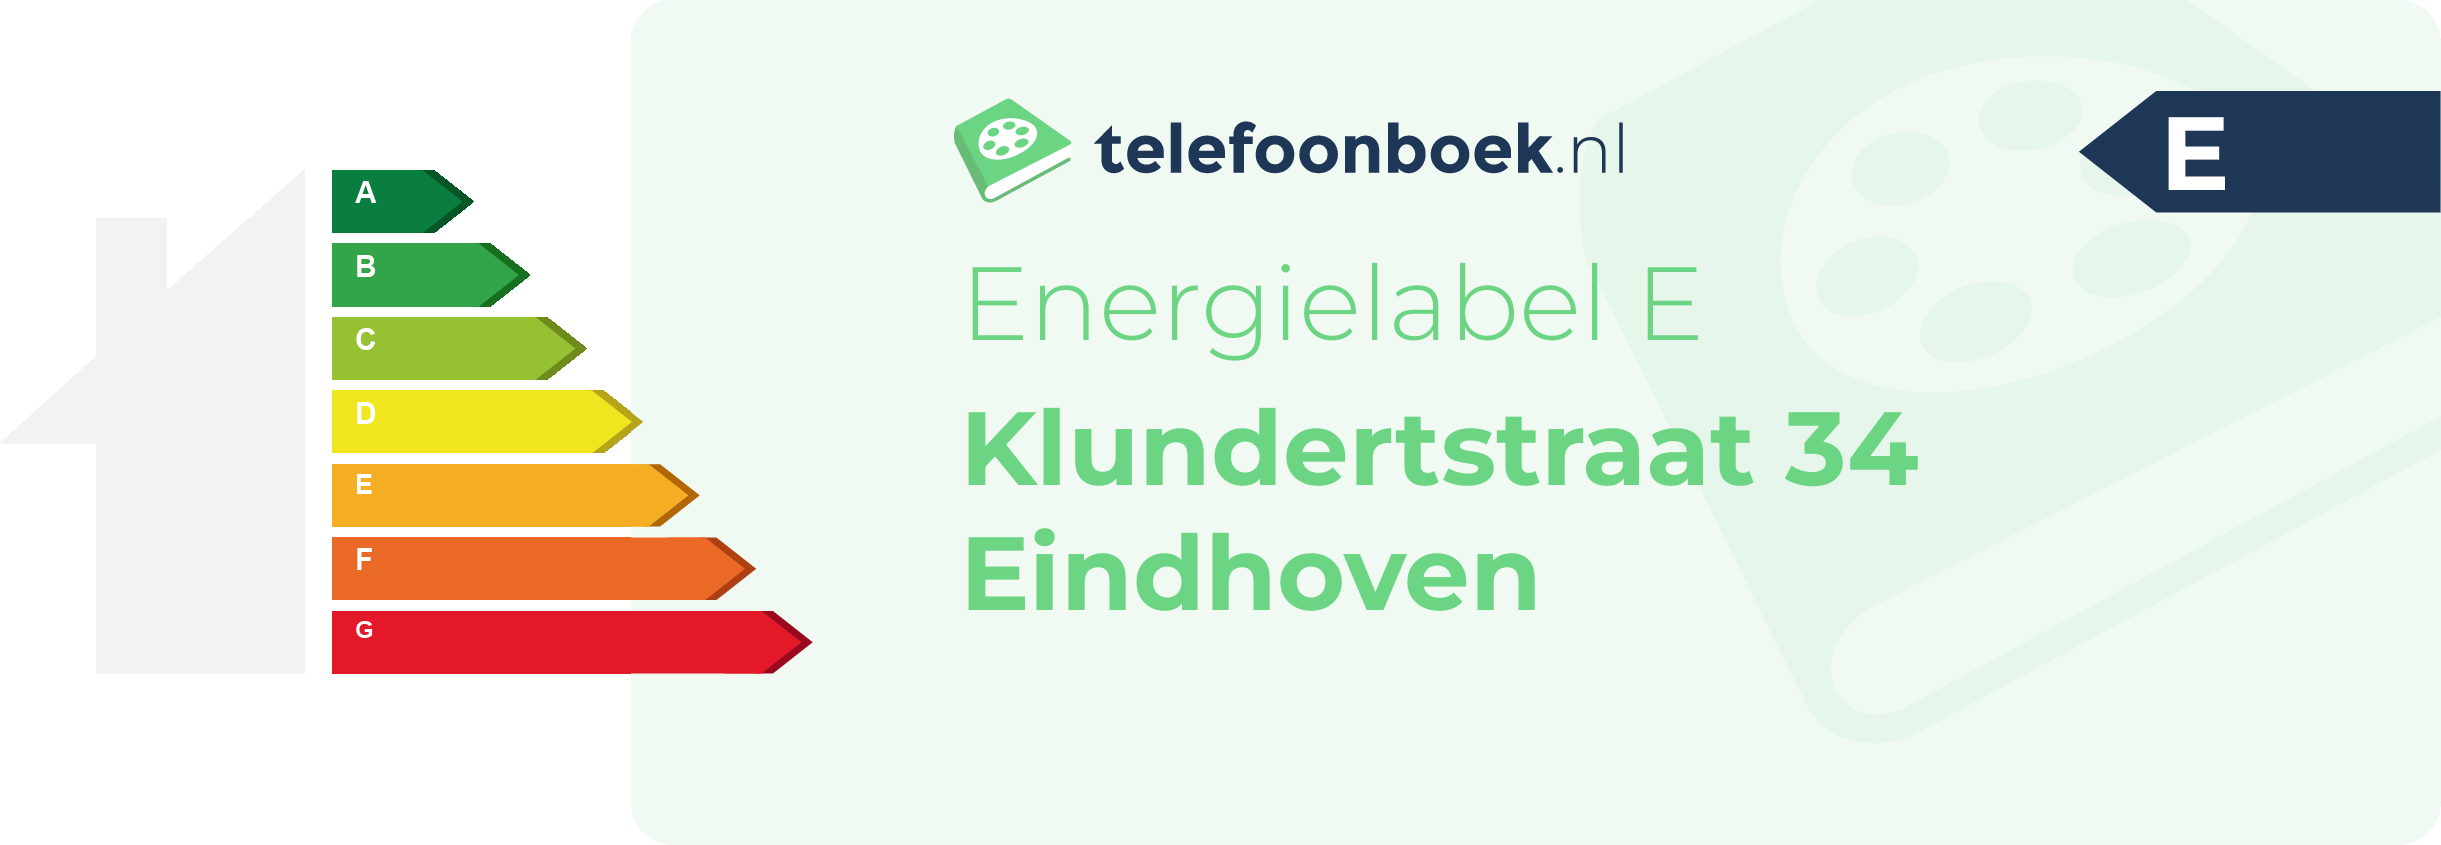 Energielabel Klundertstraat 34 Eindhoven